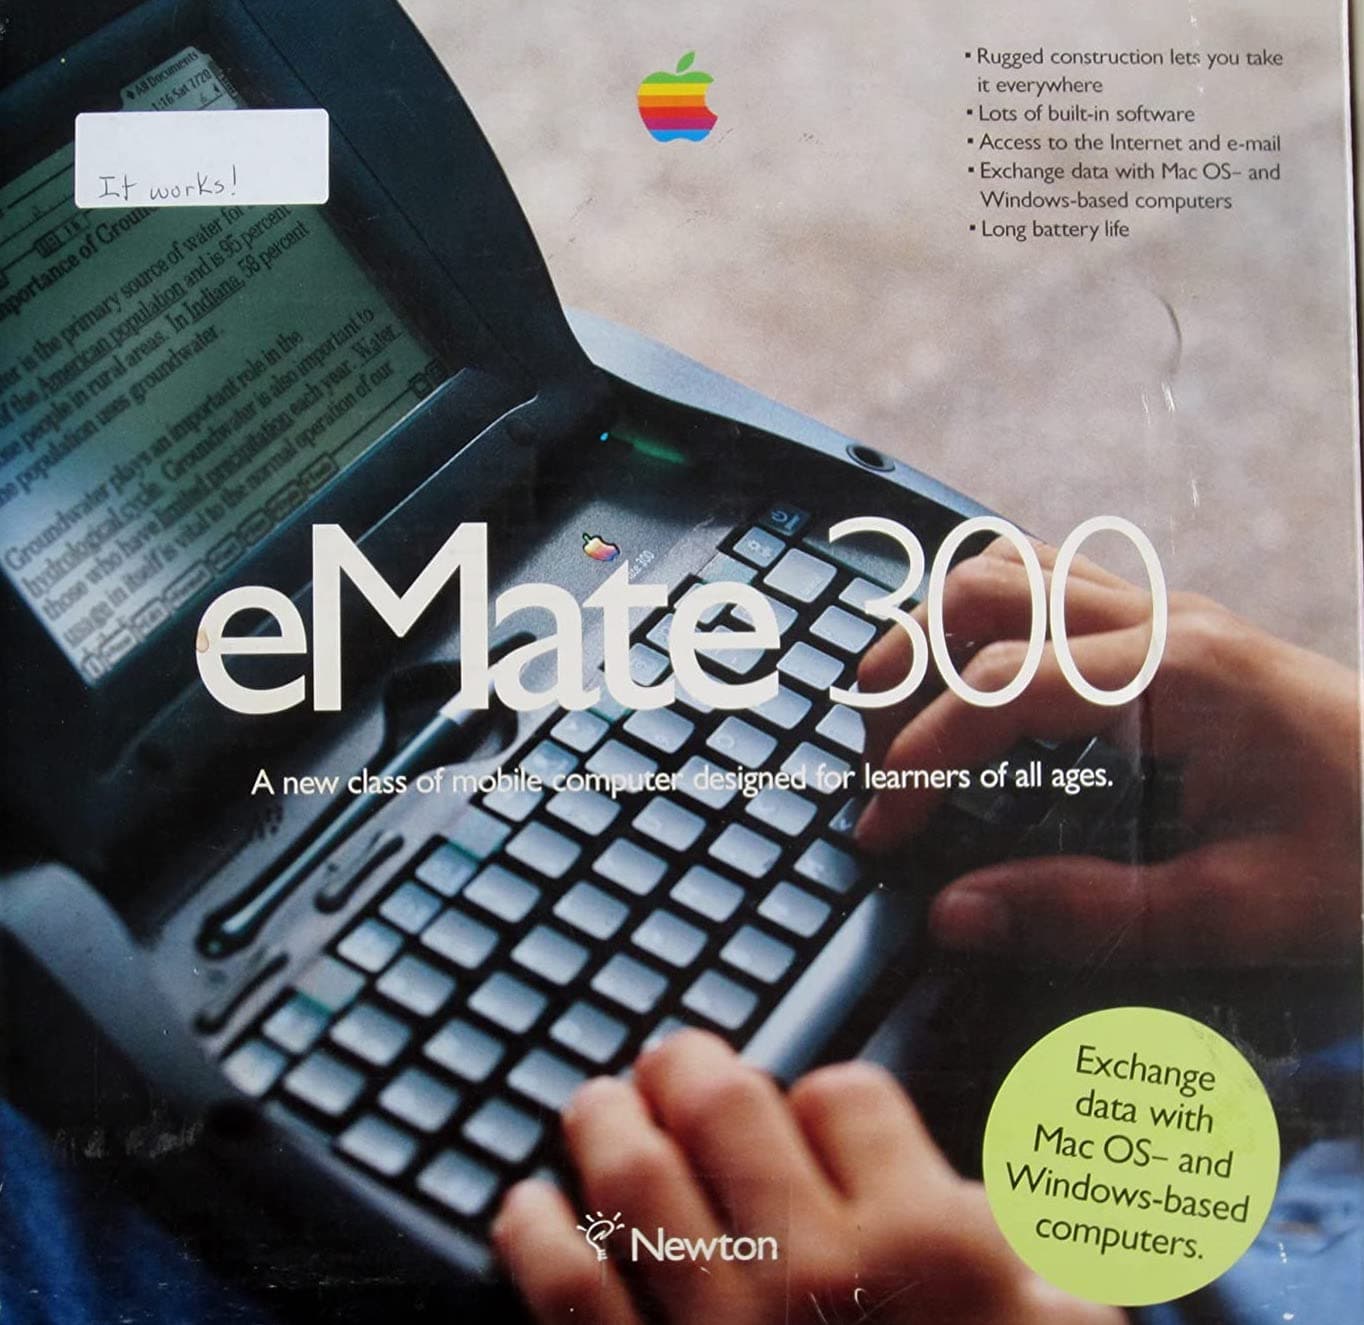 Apple eMate 300